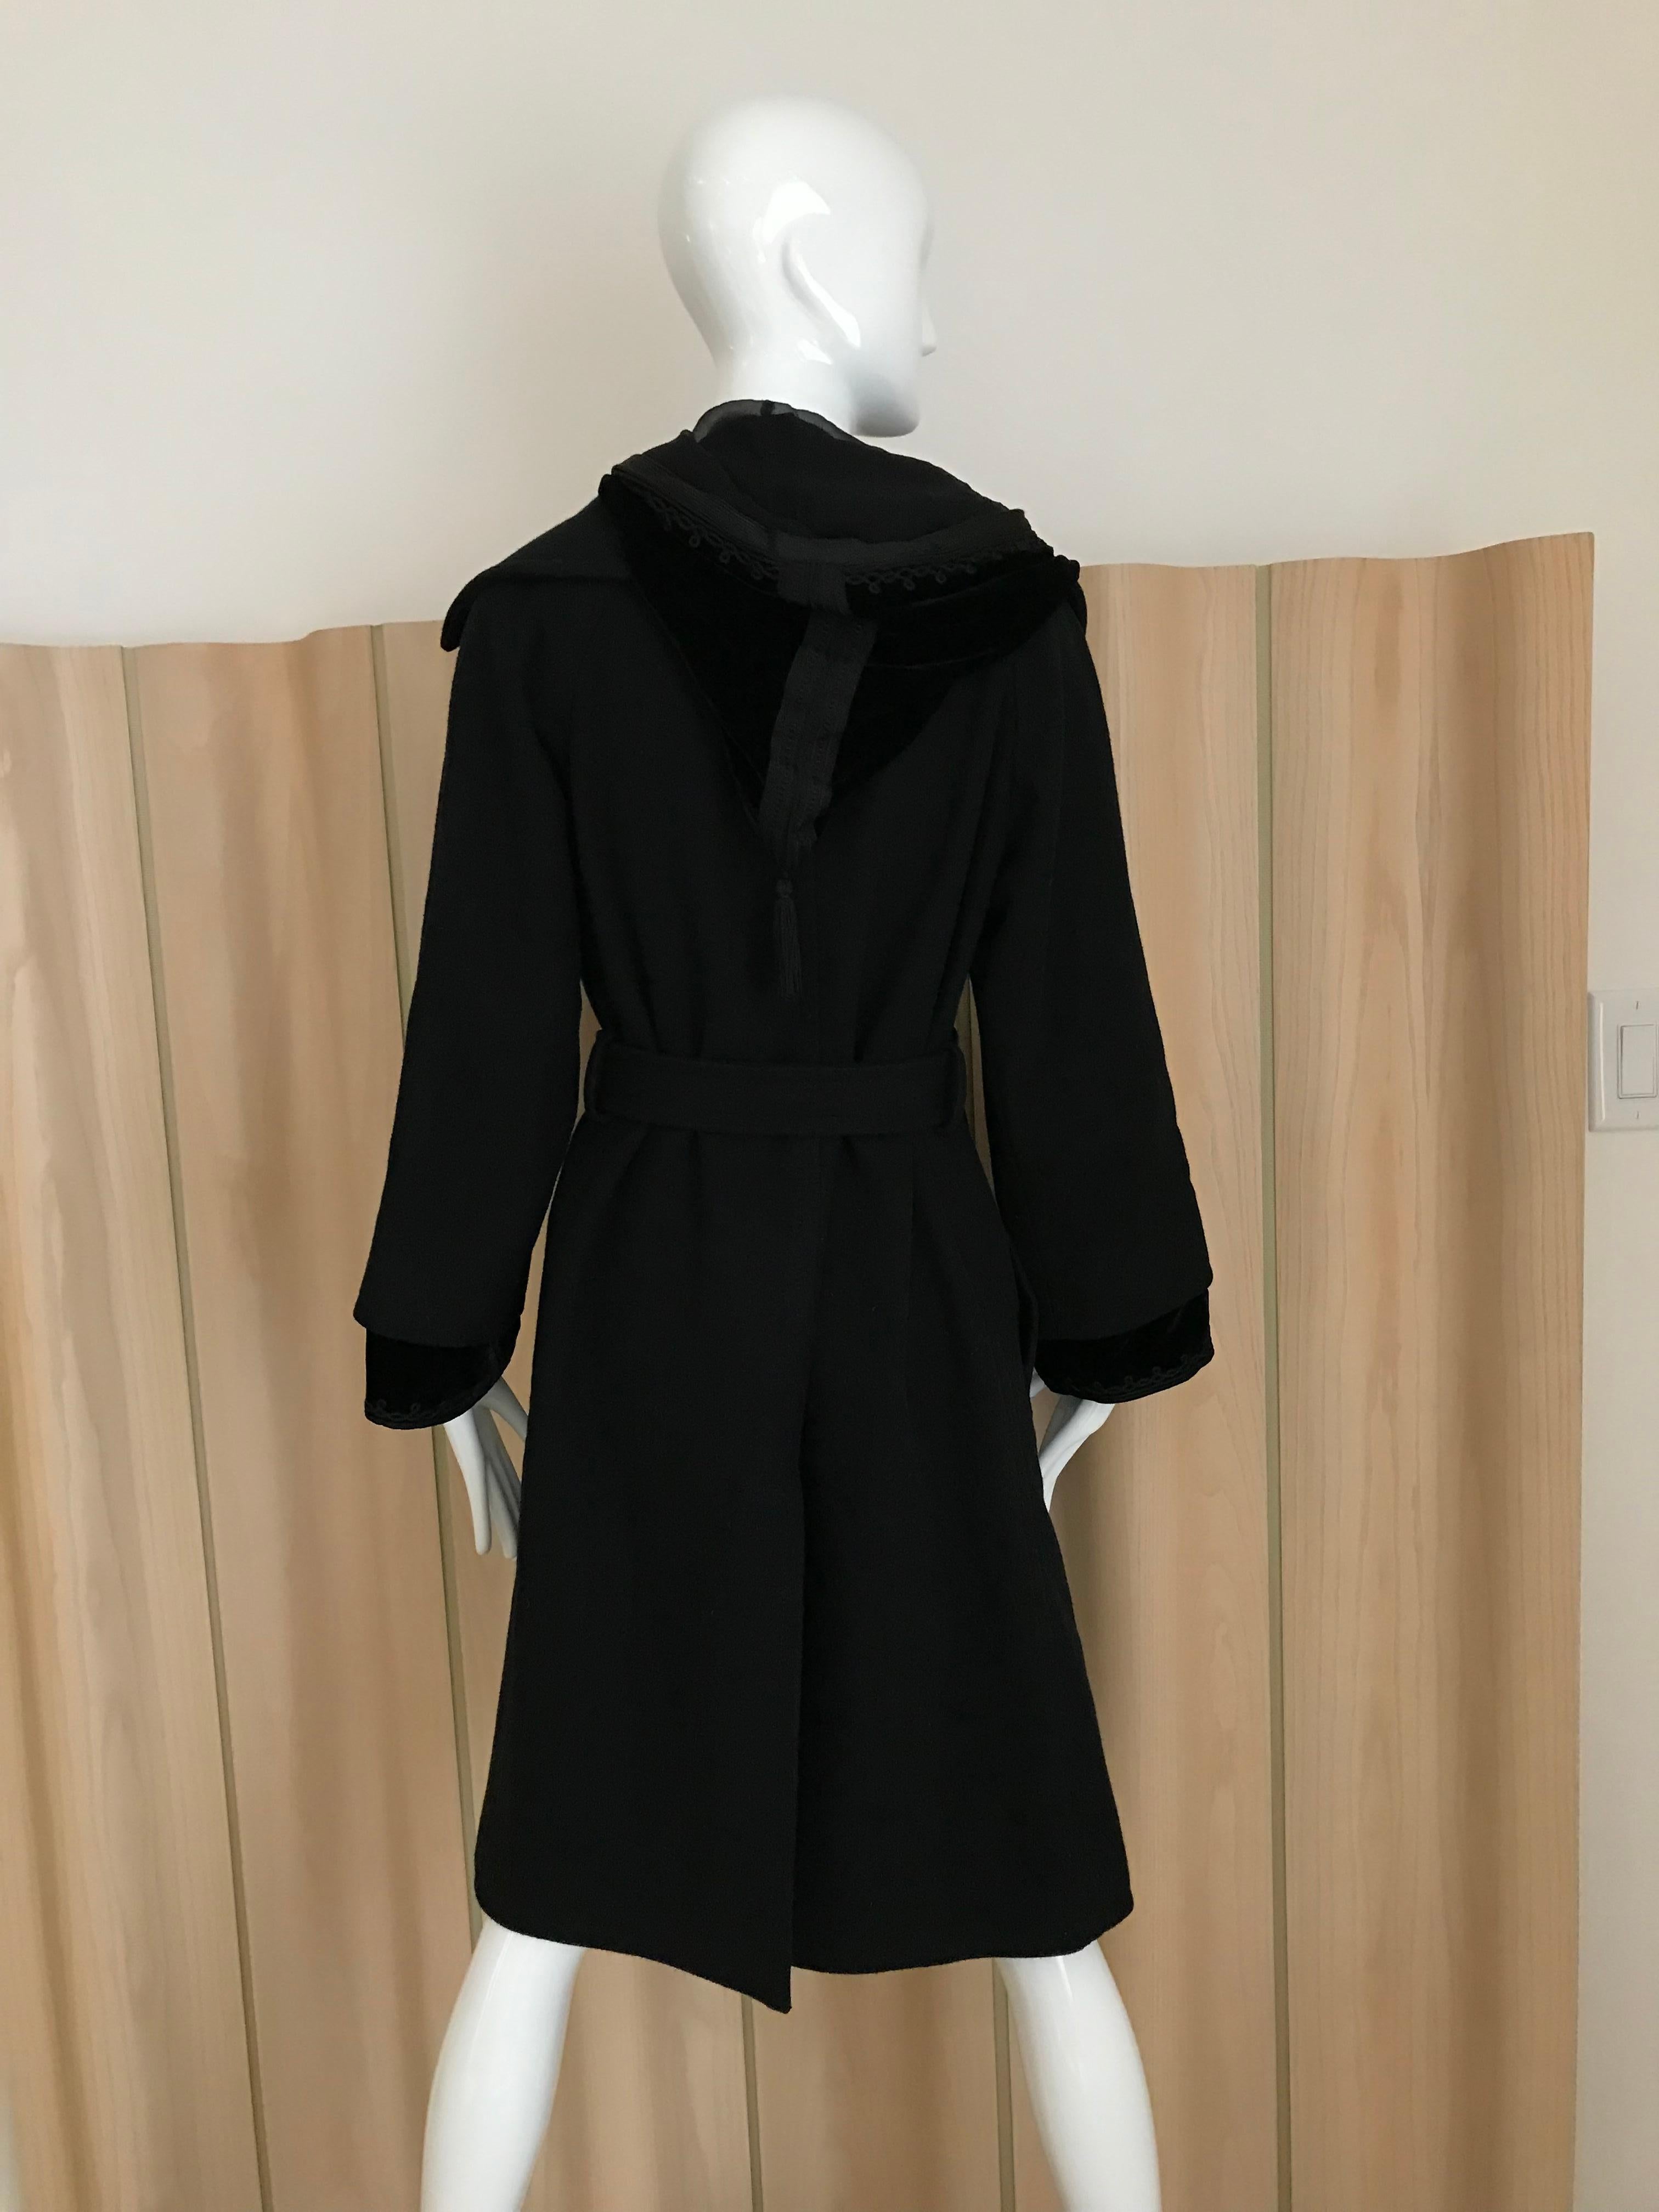 Jean Paul Gaultier Black Wool Coat with Silk Velvet Layer and Hood 1